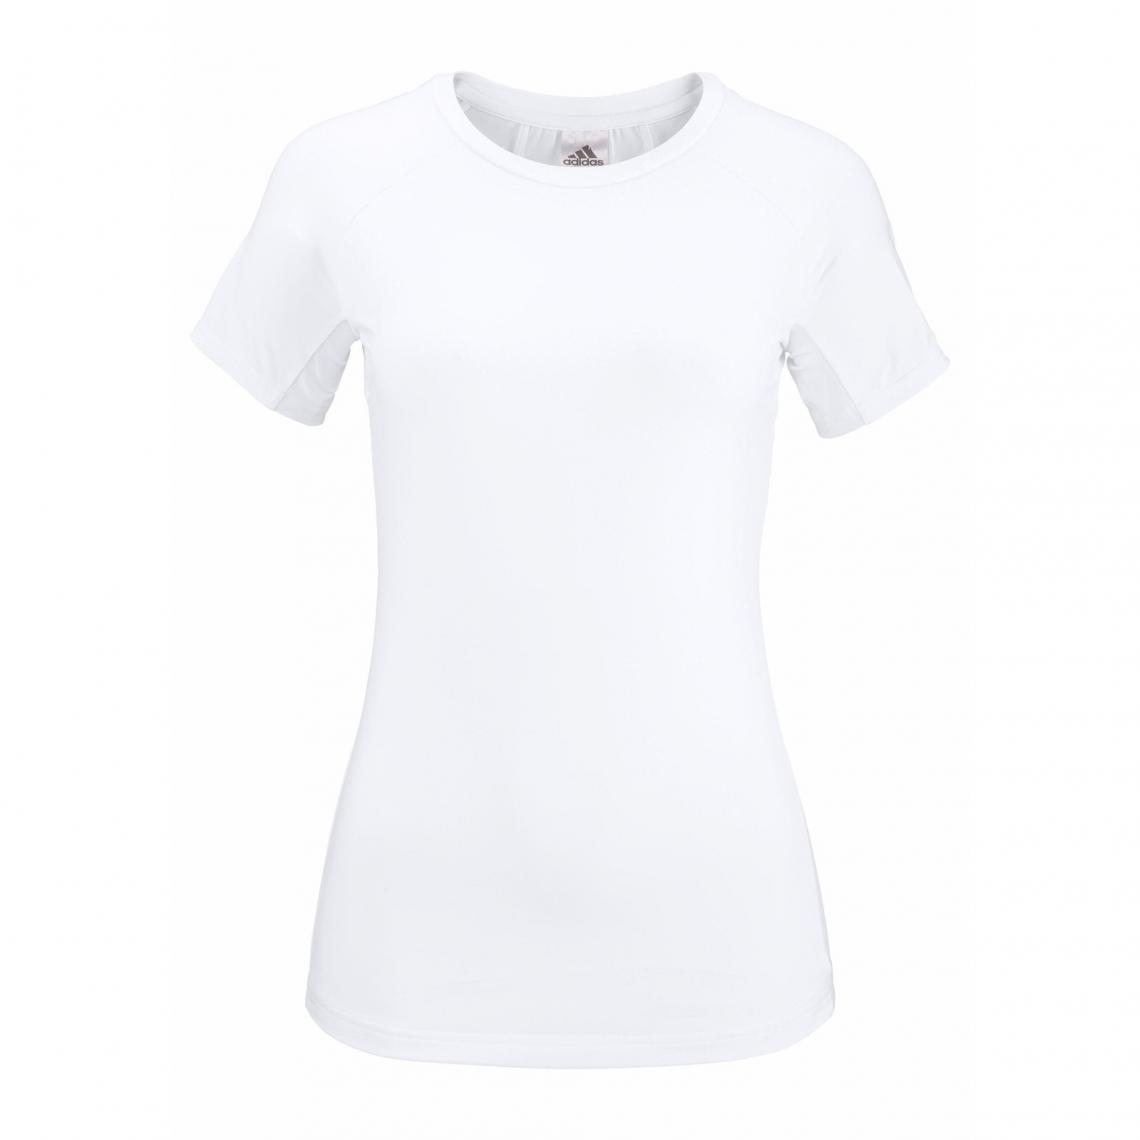 tee shirt blanc adidas femme